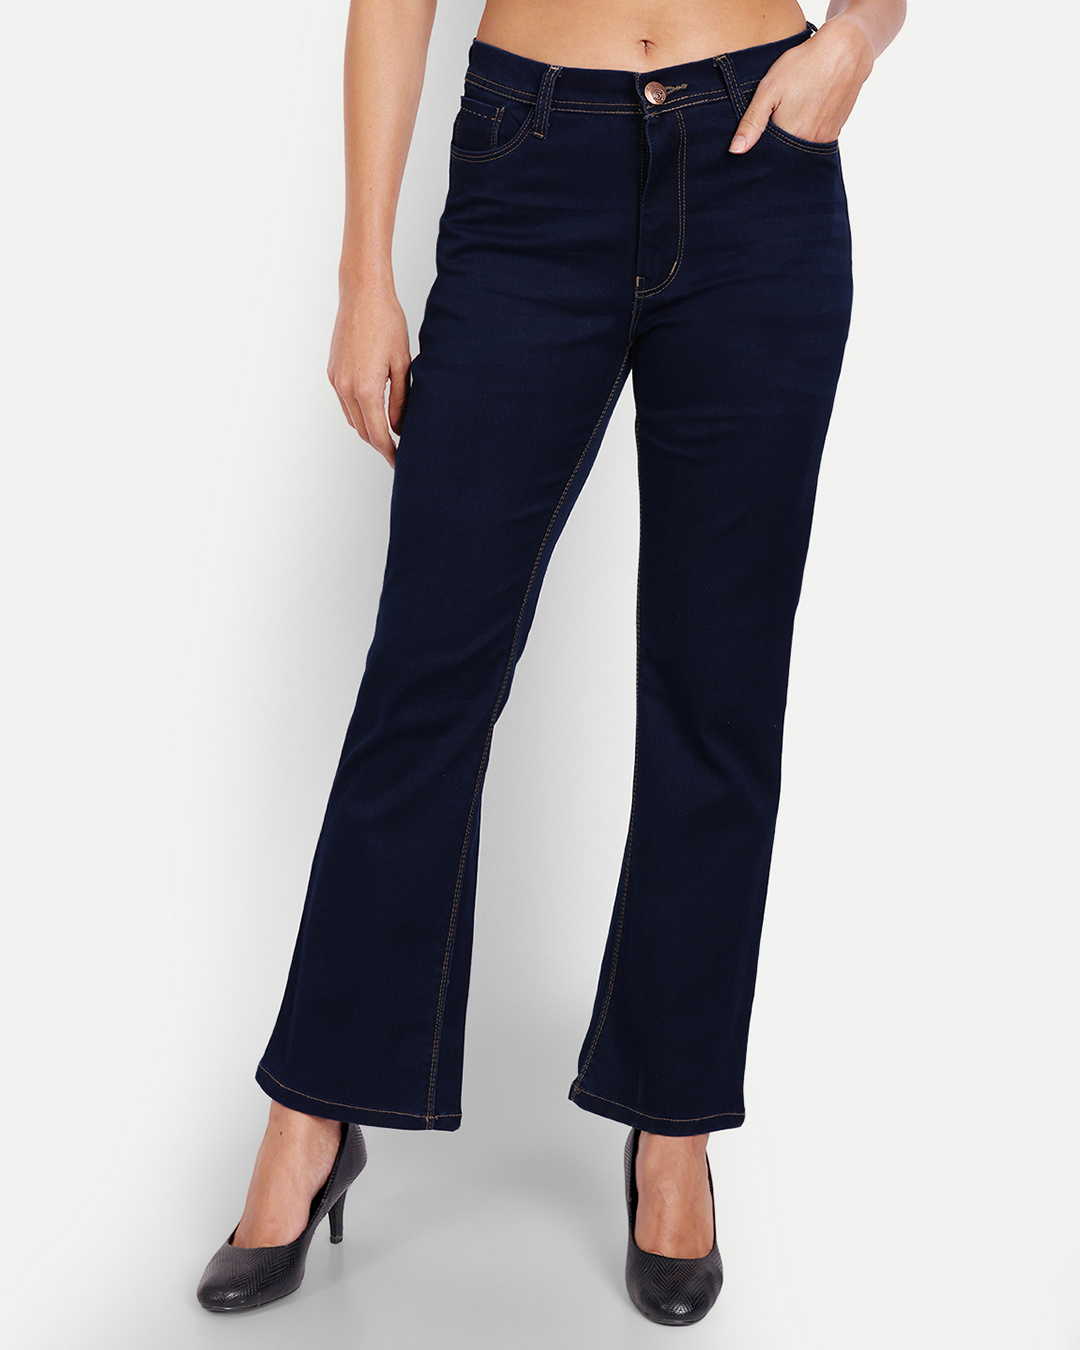 Buy Women's Blue Bootcut Jeans Online at Bewakoof